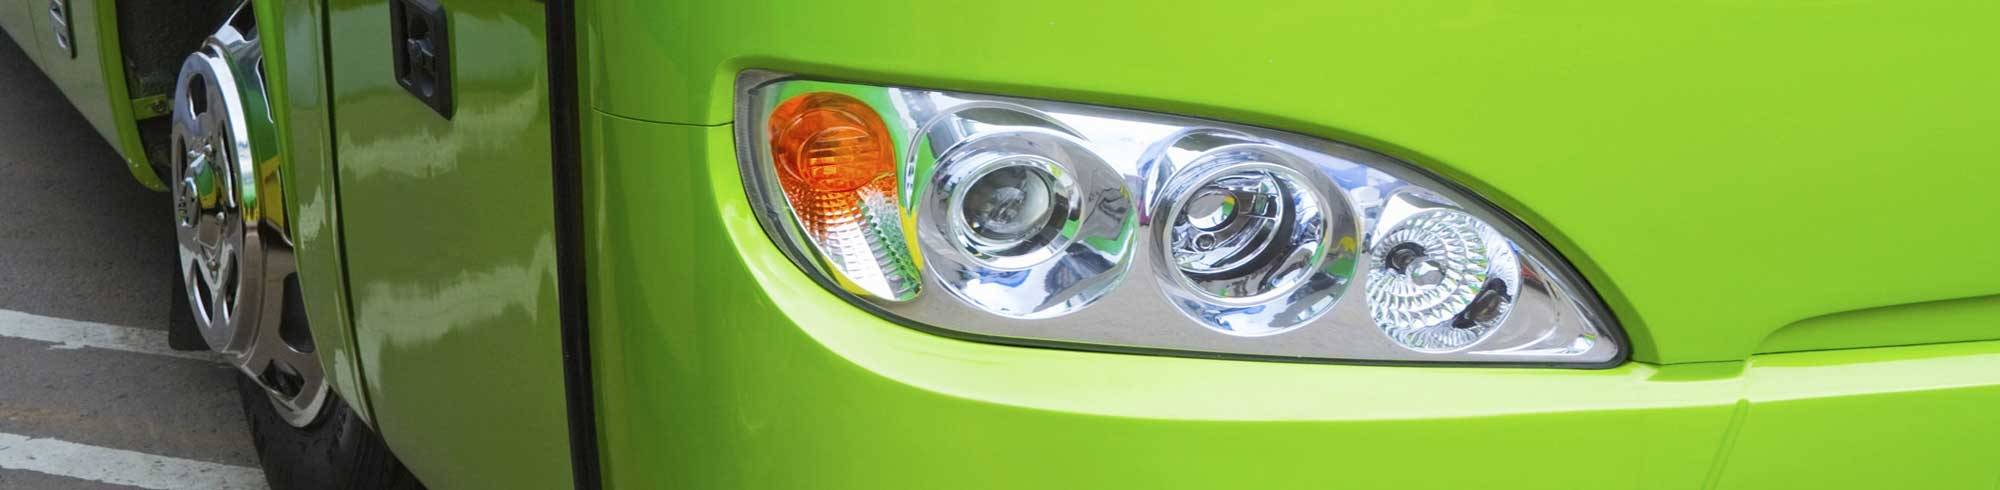 Automotive Headlight on an EV Bus